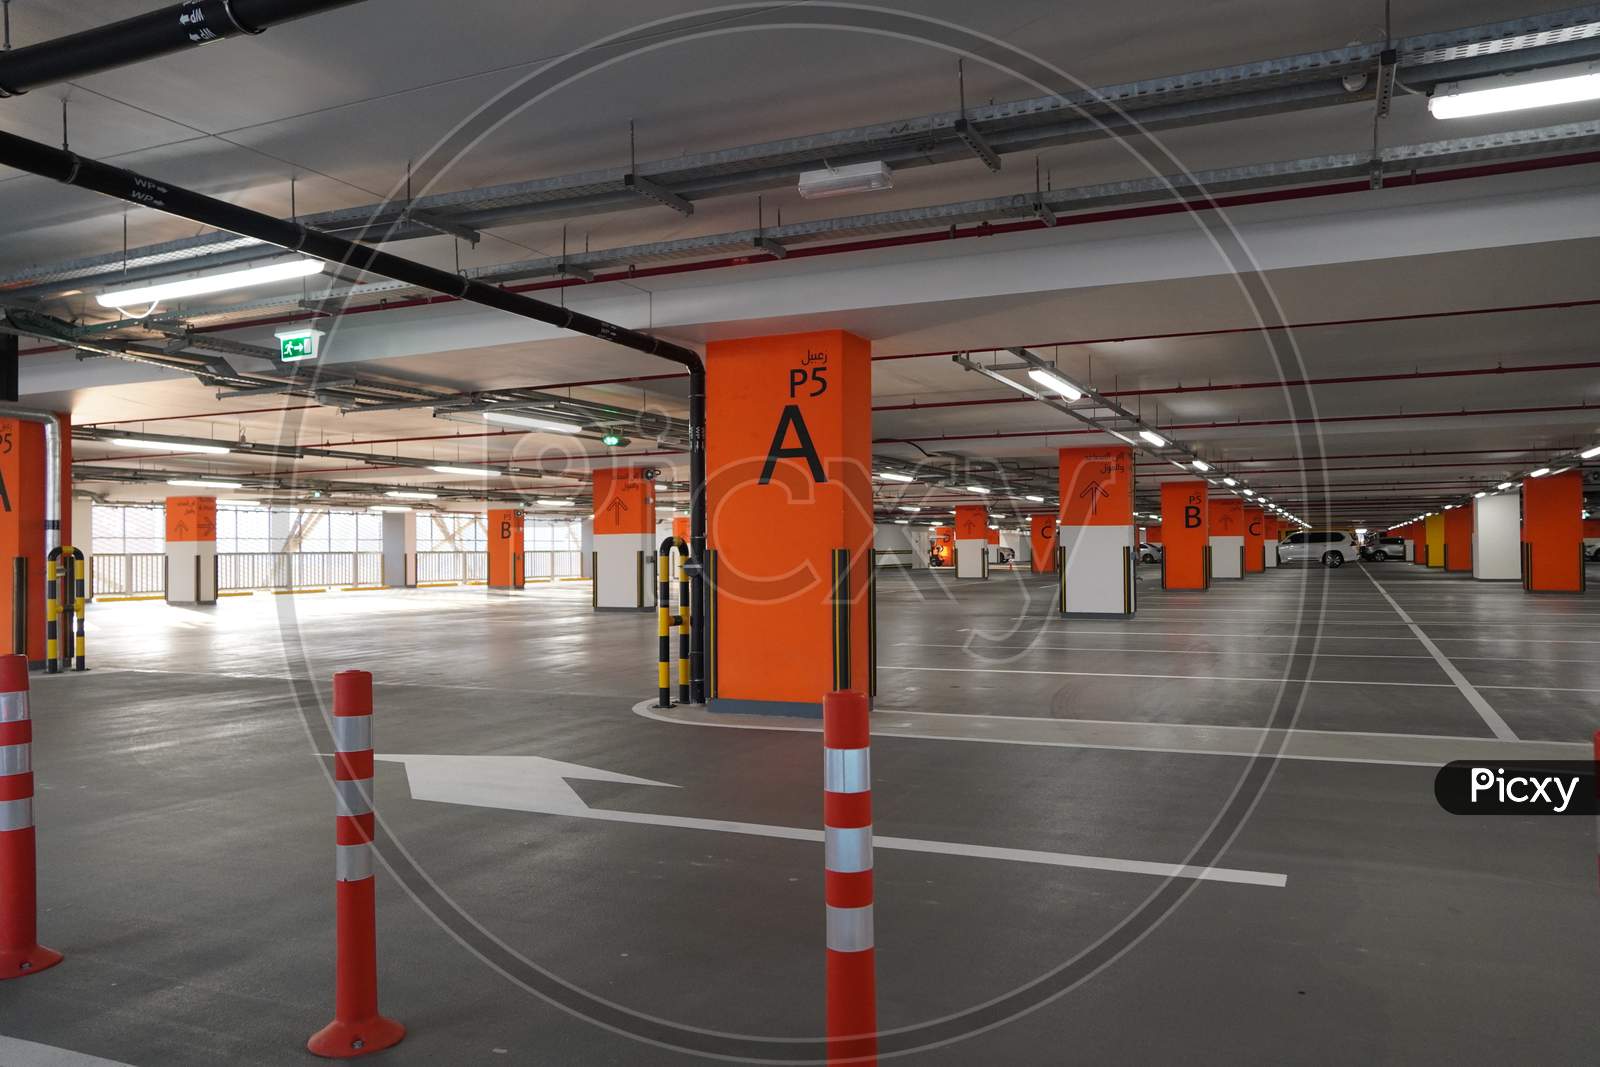 Dubai Uae December 2019 Underground Parking Which Is Almost Empty. Empty Garage In Basement Of Office Building. Reinforced Concrete Monolithic Floors In Basement. Urban, Industrial Background.